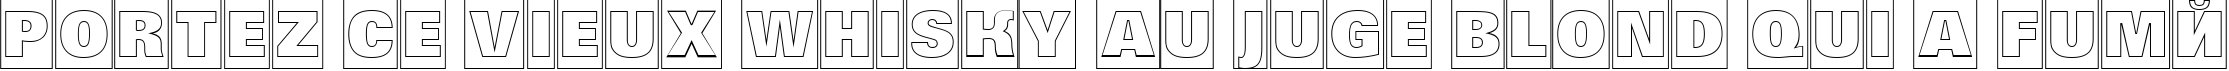 Пример написания шрифтом a_GroticTitulCmOtlHv текста на французском